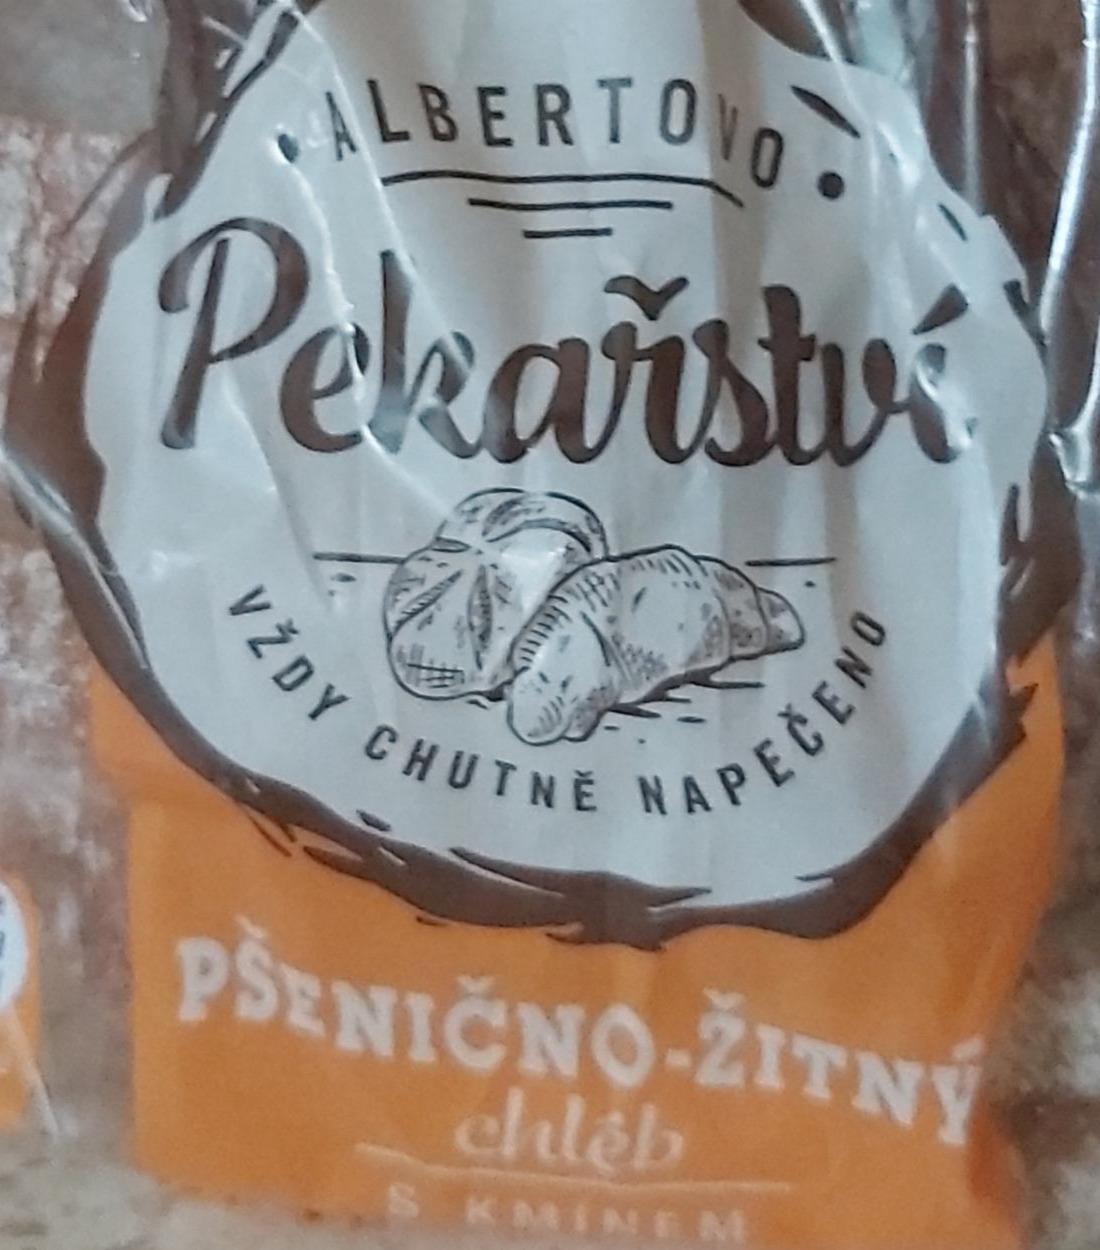 Фото - Pšenično žitný chléb s kmínem Albertovo pekařství